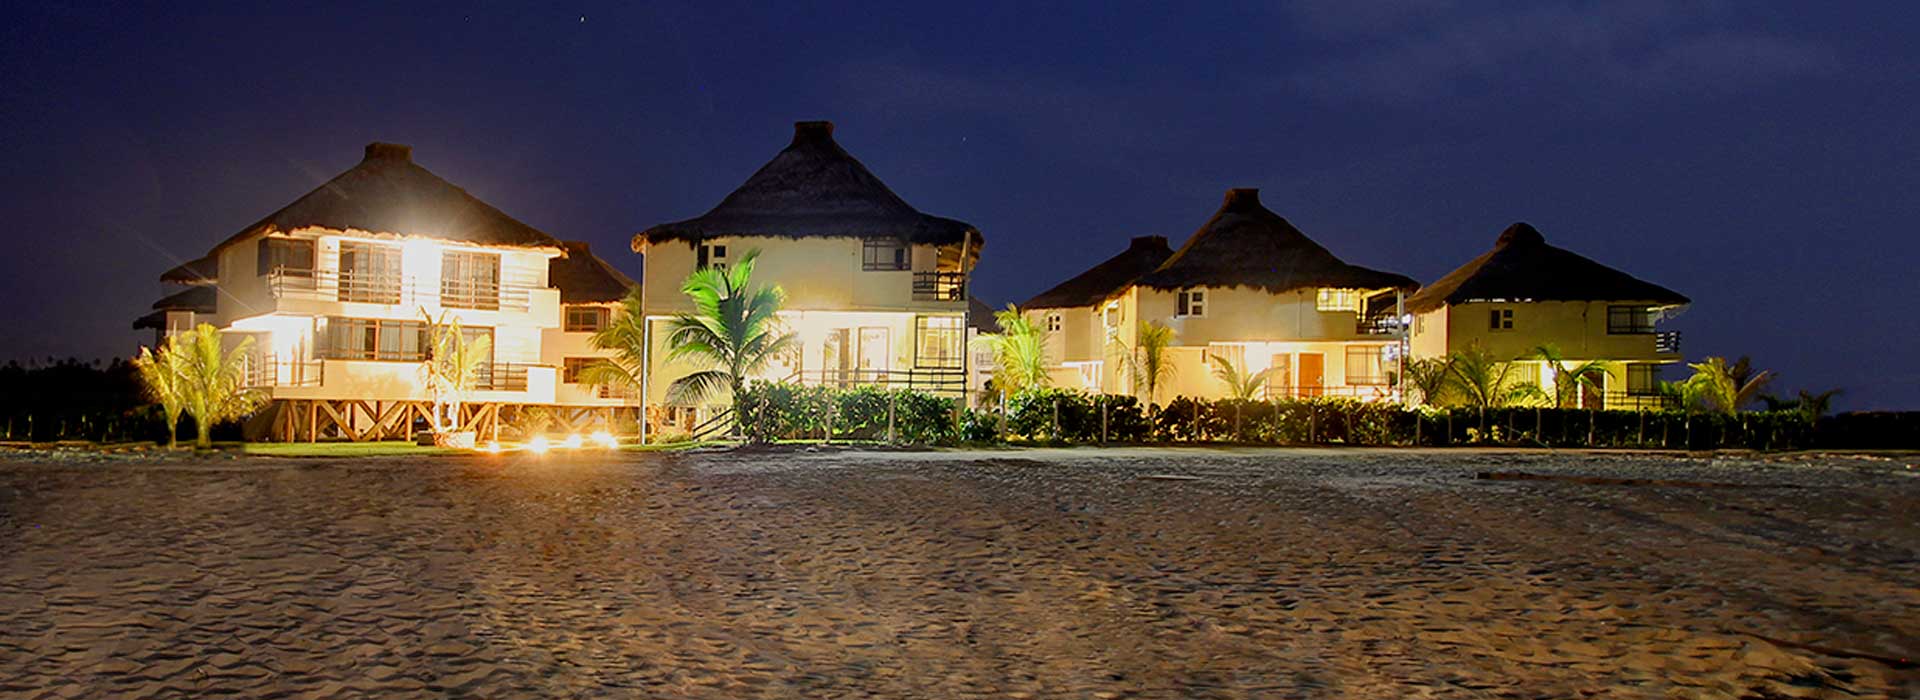 Villas Paraiso Resort Coyuca de Benitez Guerrero